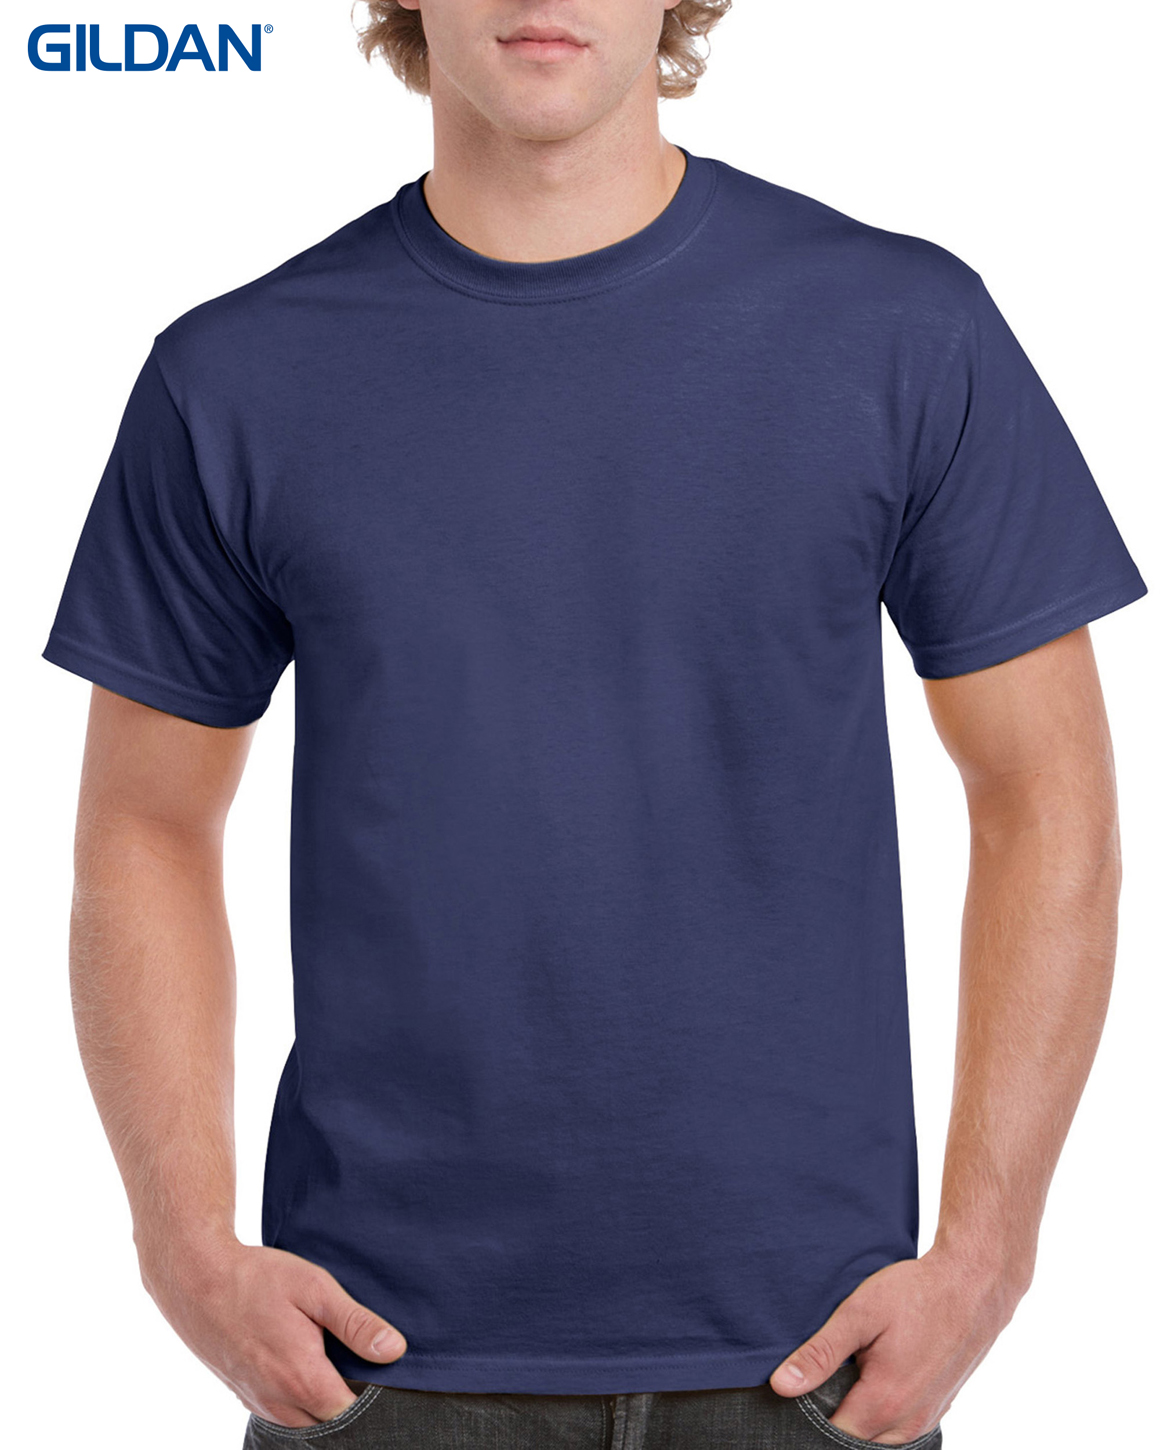 T Shirts : GILDAN MENS HEAVYWEIGHT 200GM 100% COTTON CN T-SHIRT G2000